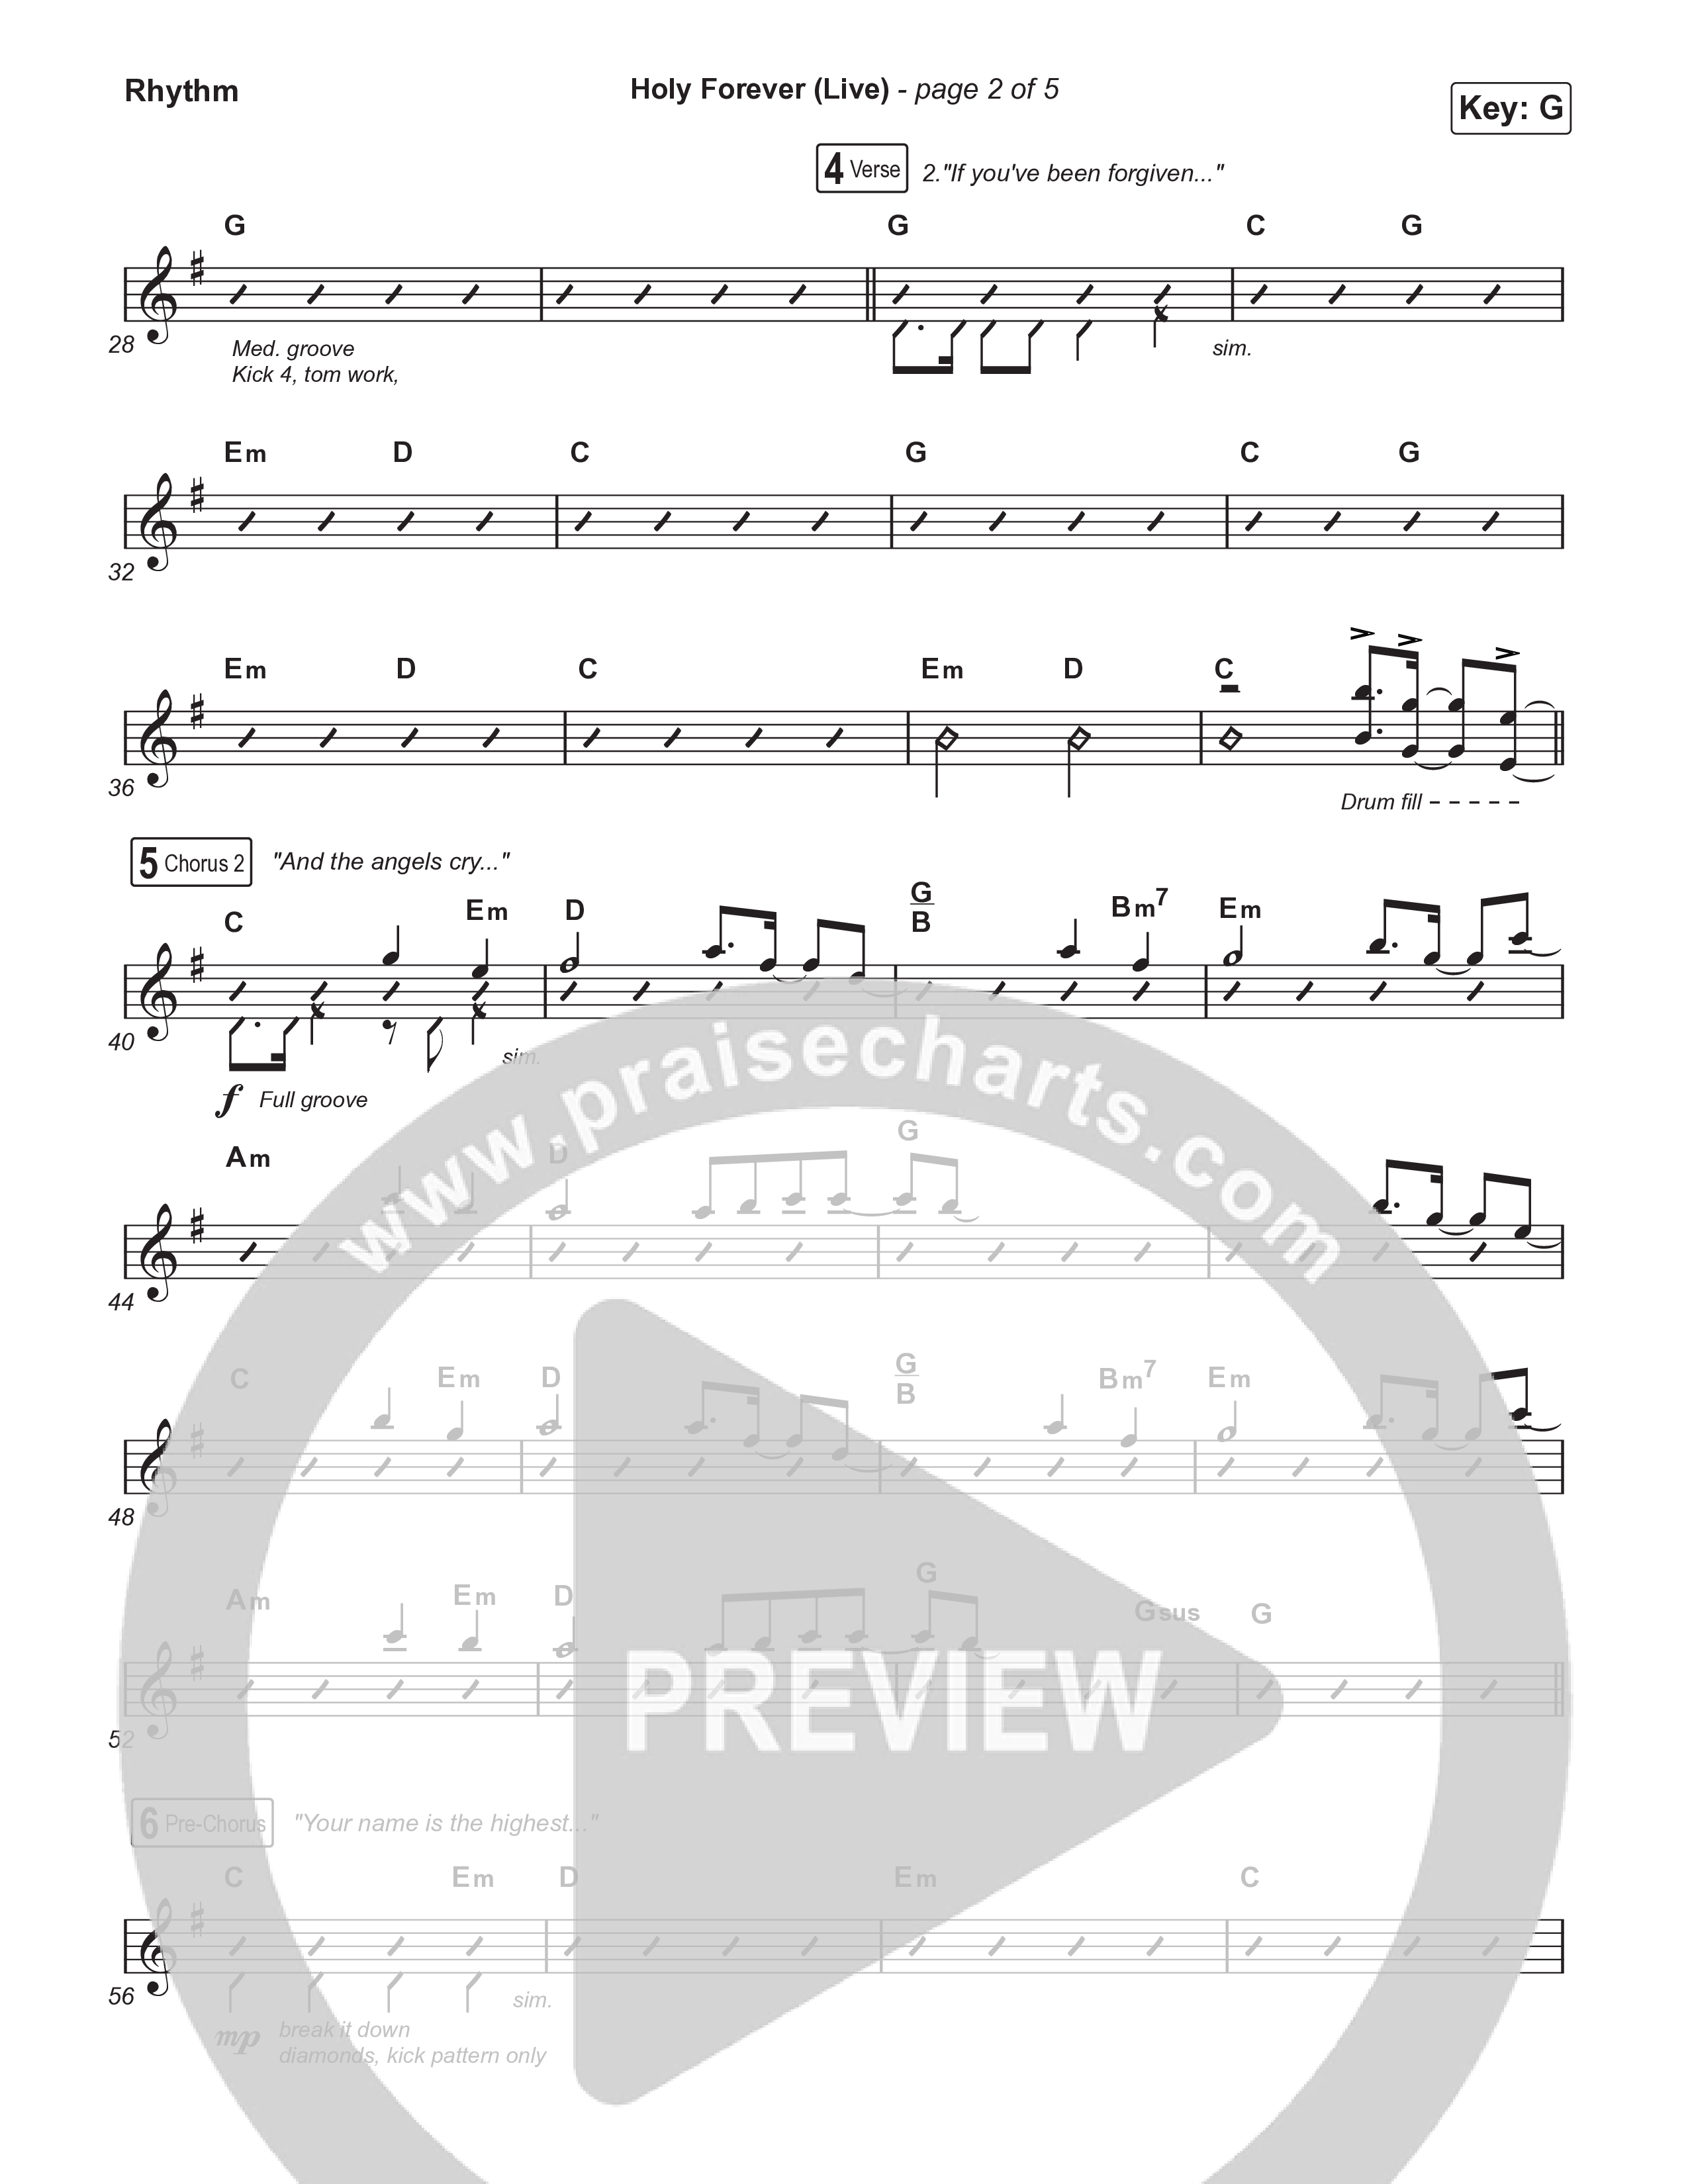 Holy Forever (Worship Choir/SAB) Rhythm Pack (CeCe Winans / Arr. Luke Gambill)